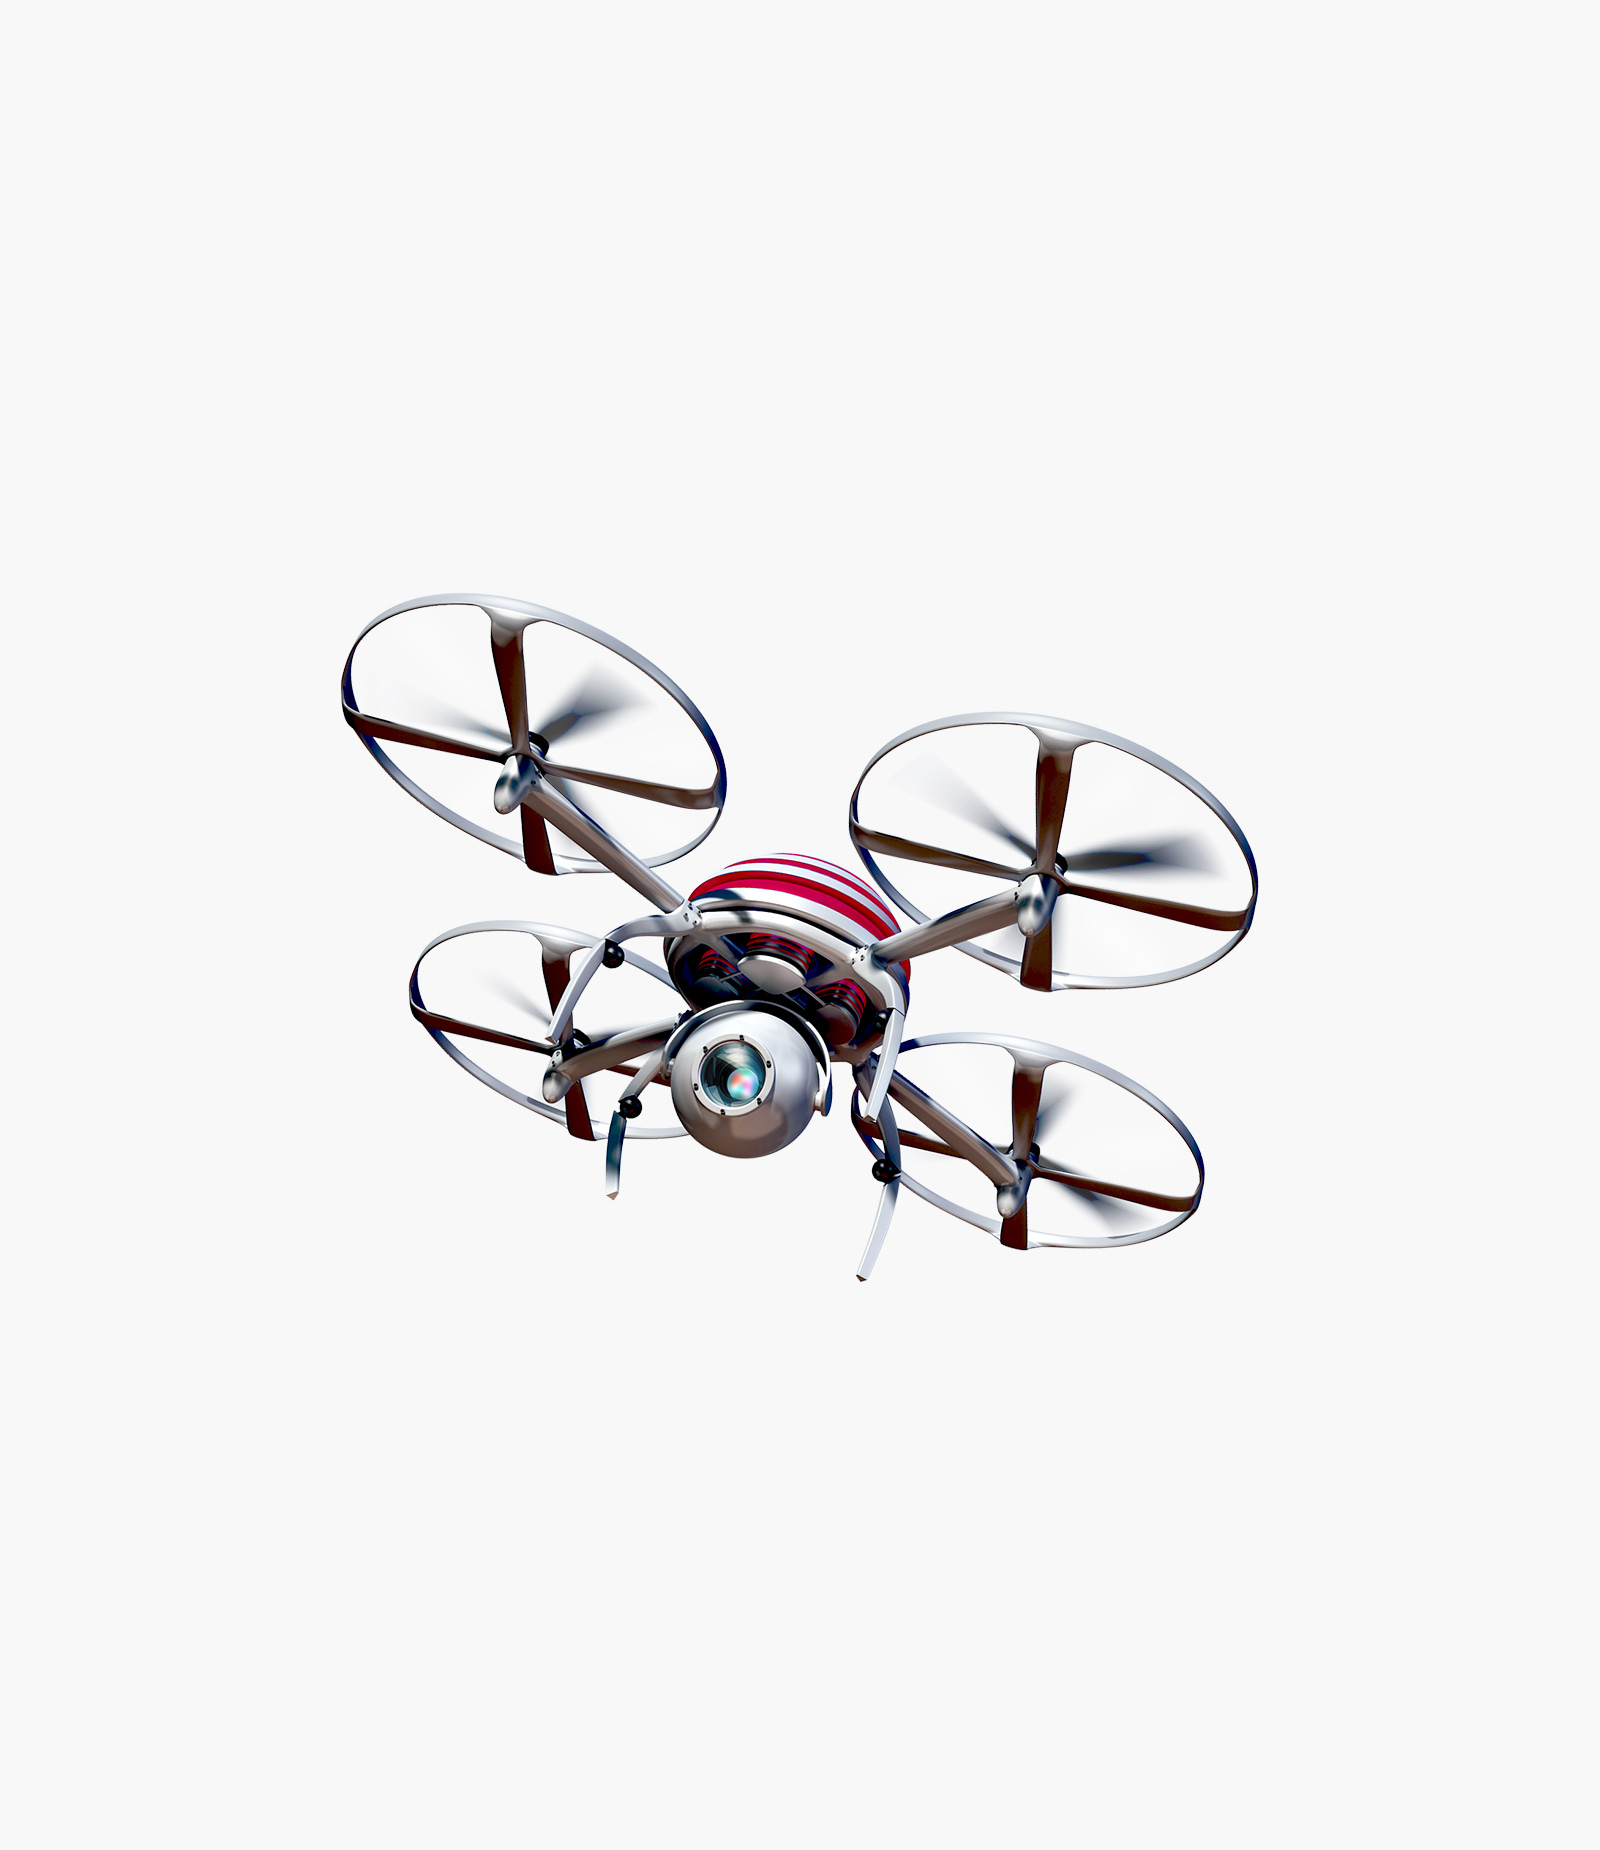 Eagle Eye Pro Drone with 4K UHD Camera